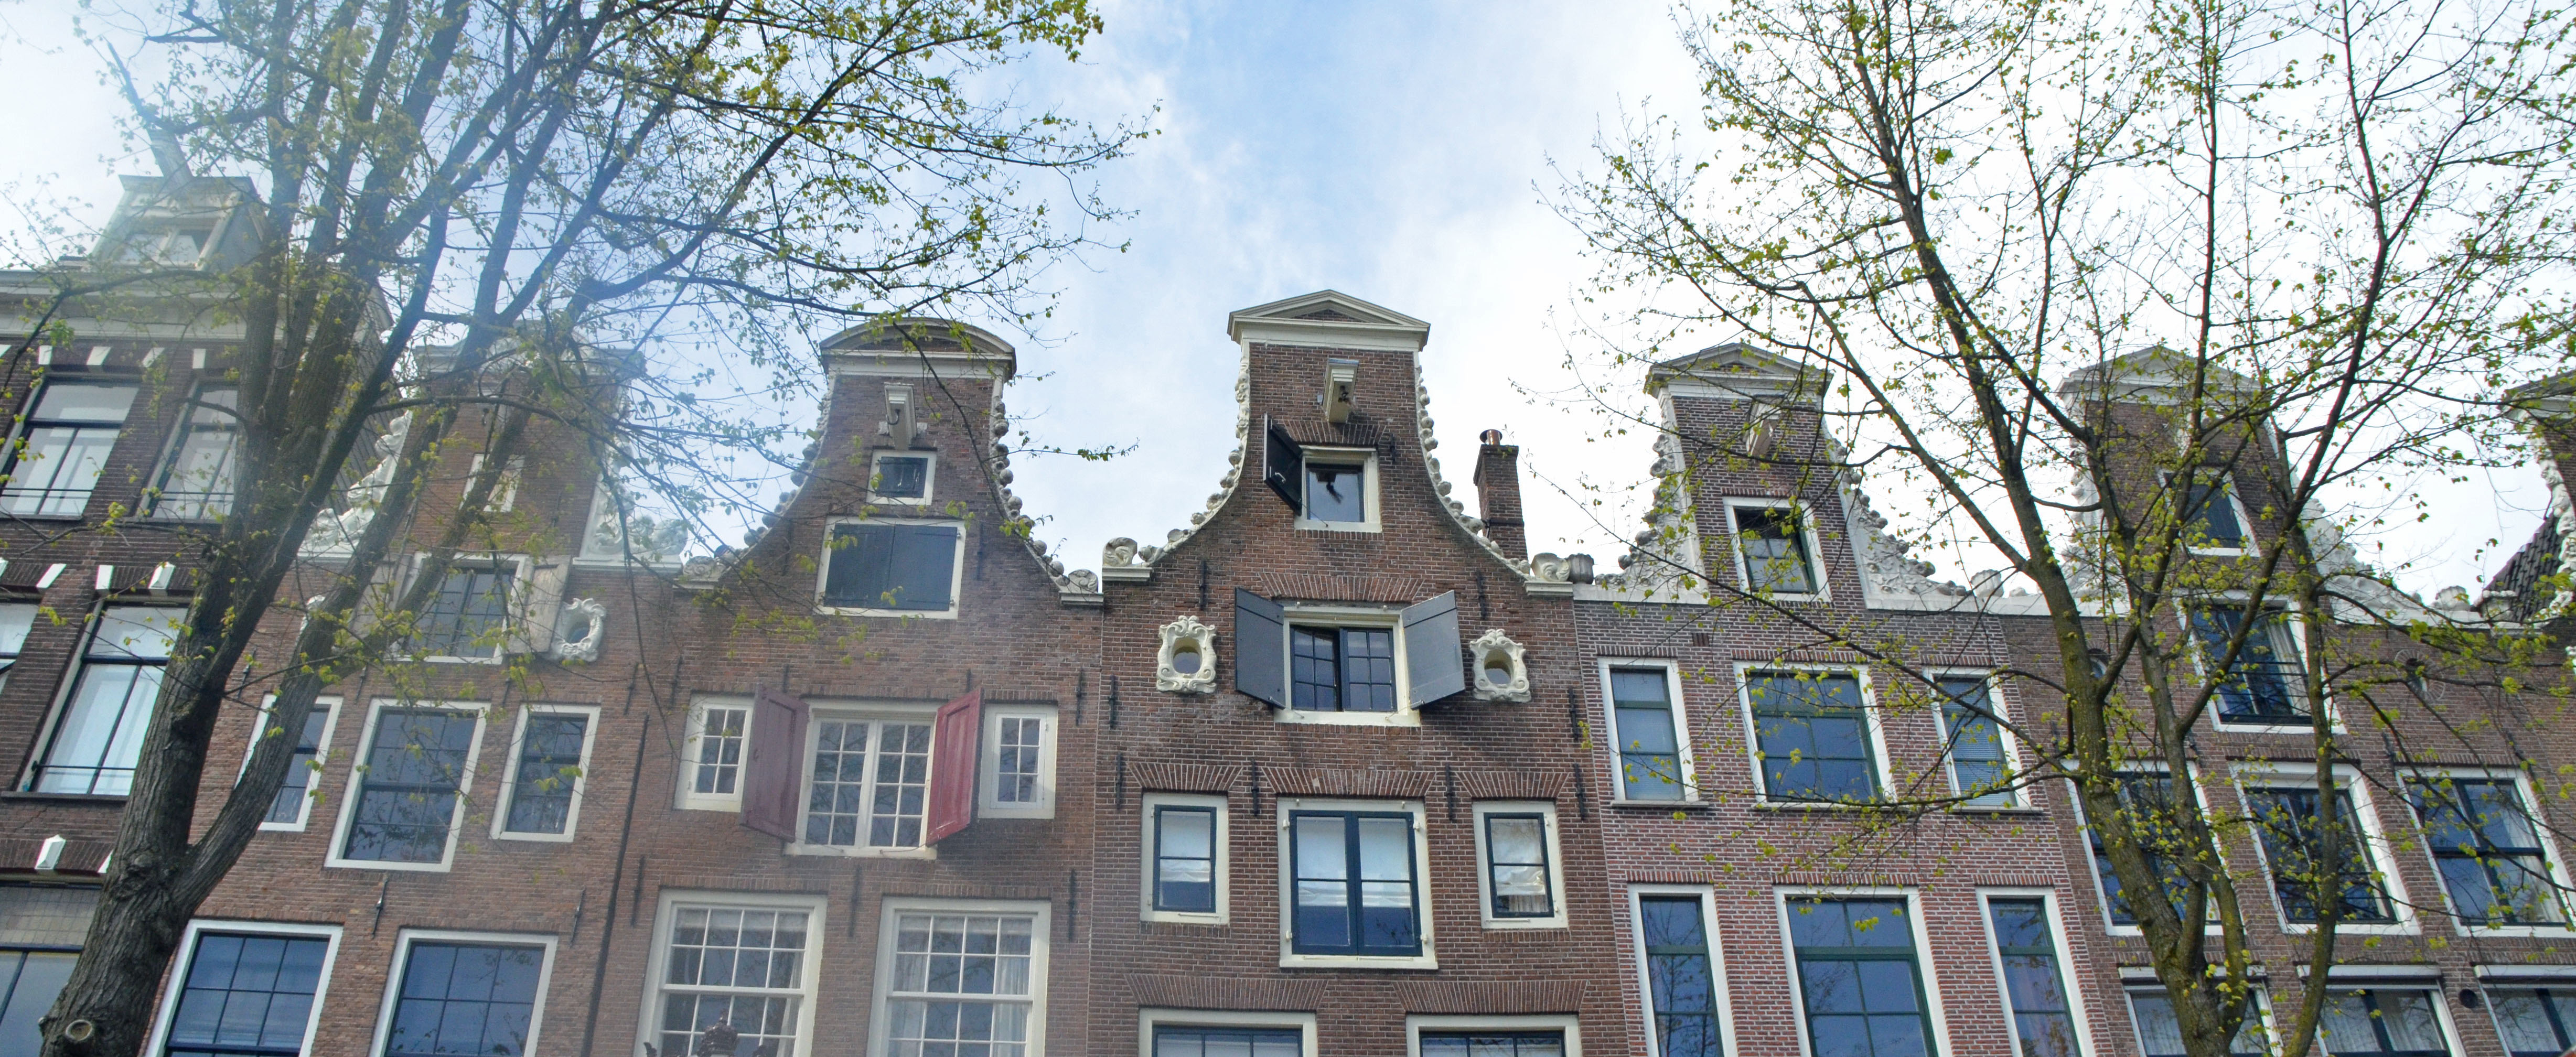 Flemish Houses